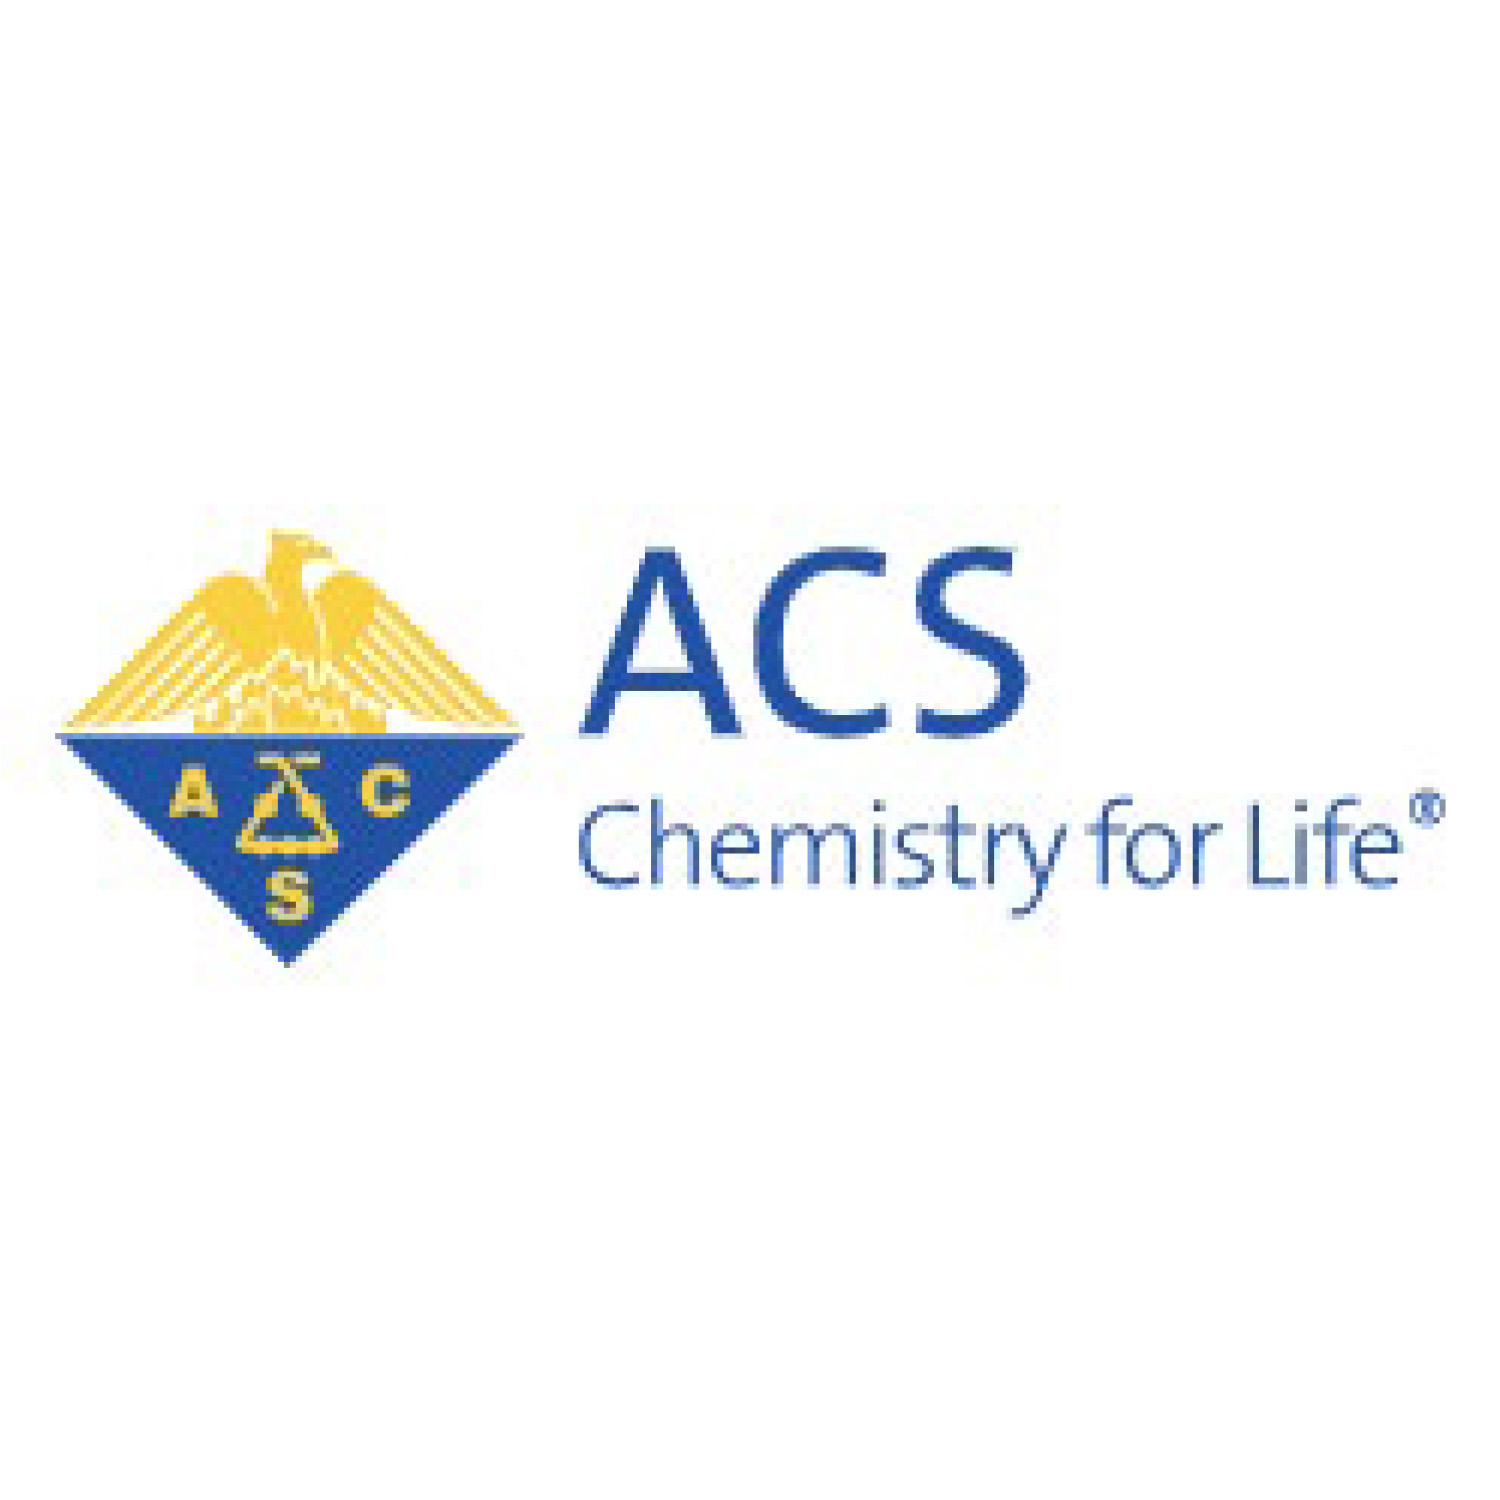 ACS Chemistry for Life logo